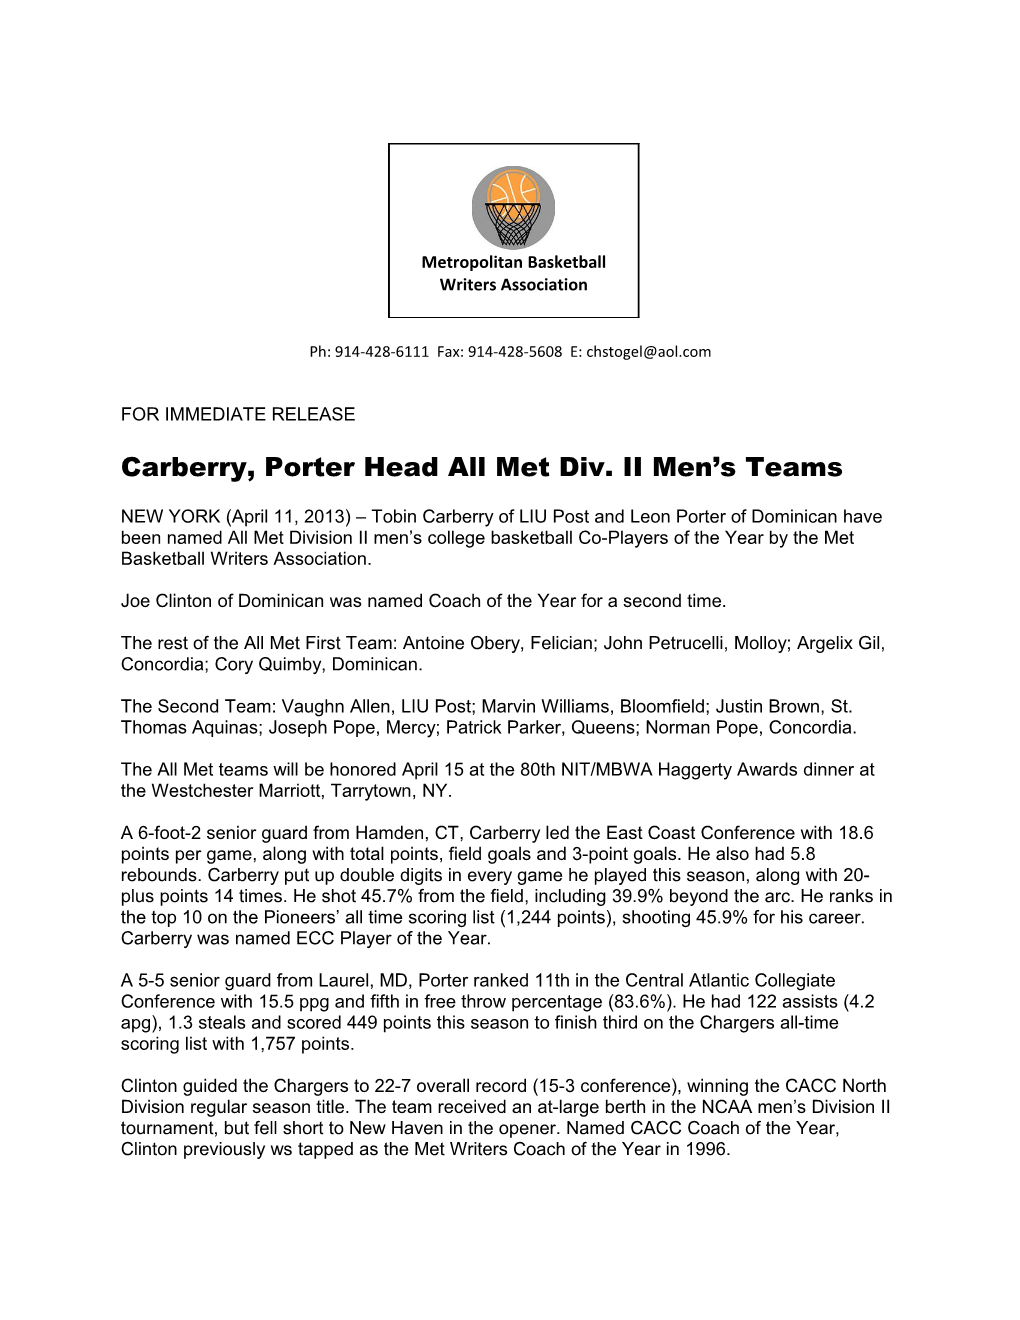 Carberry, Porter Head All Met Div. II Men S Teams